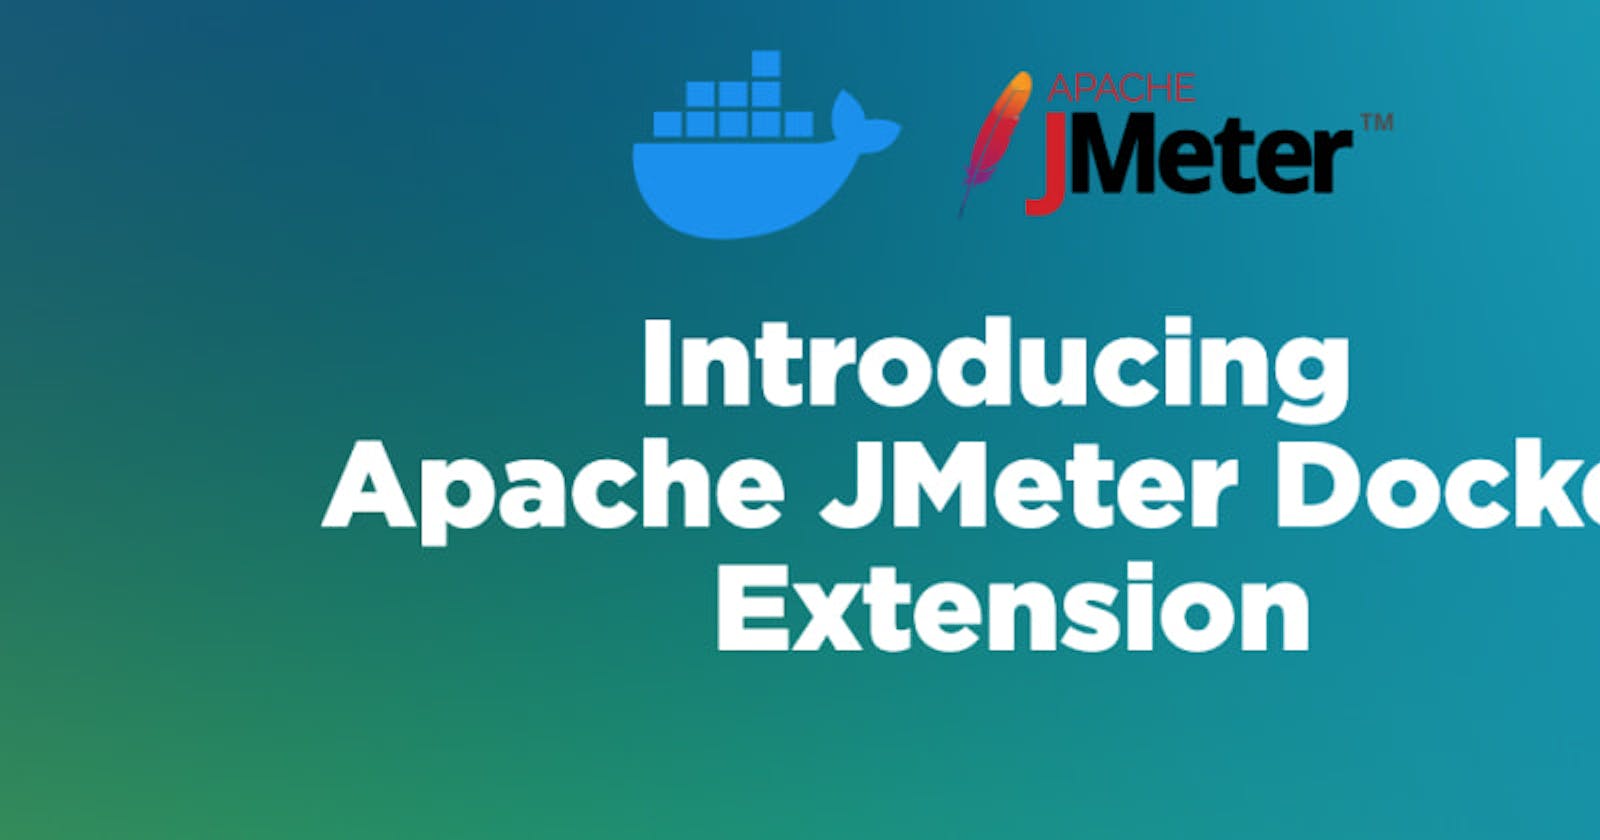 Introducing the Apache JMeter Docker Extension